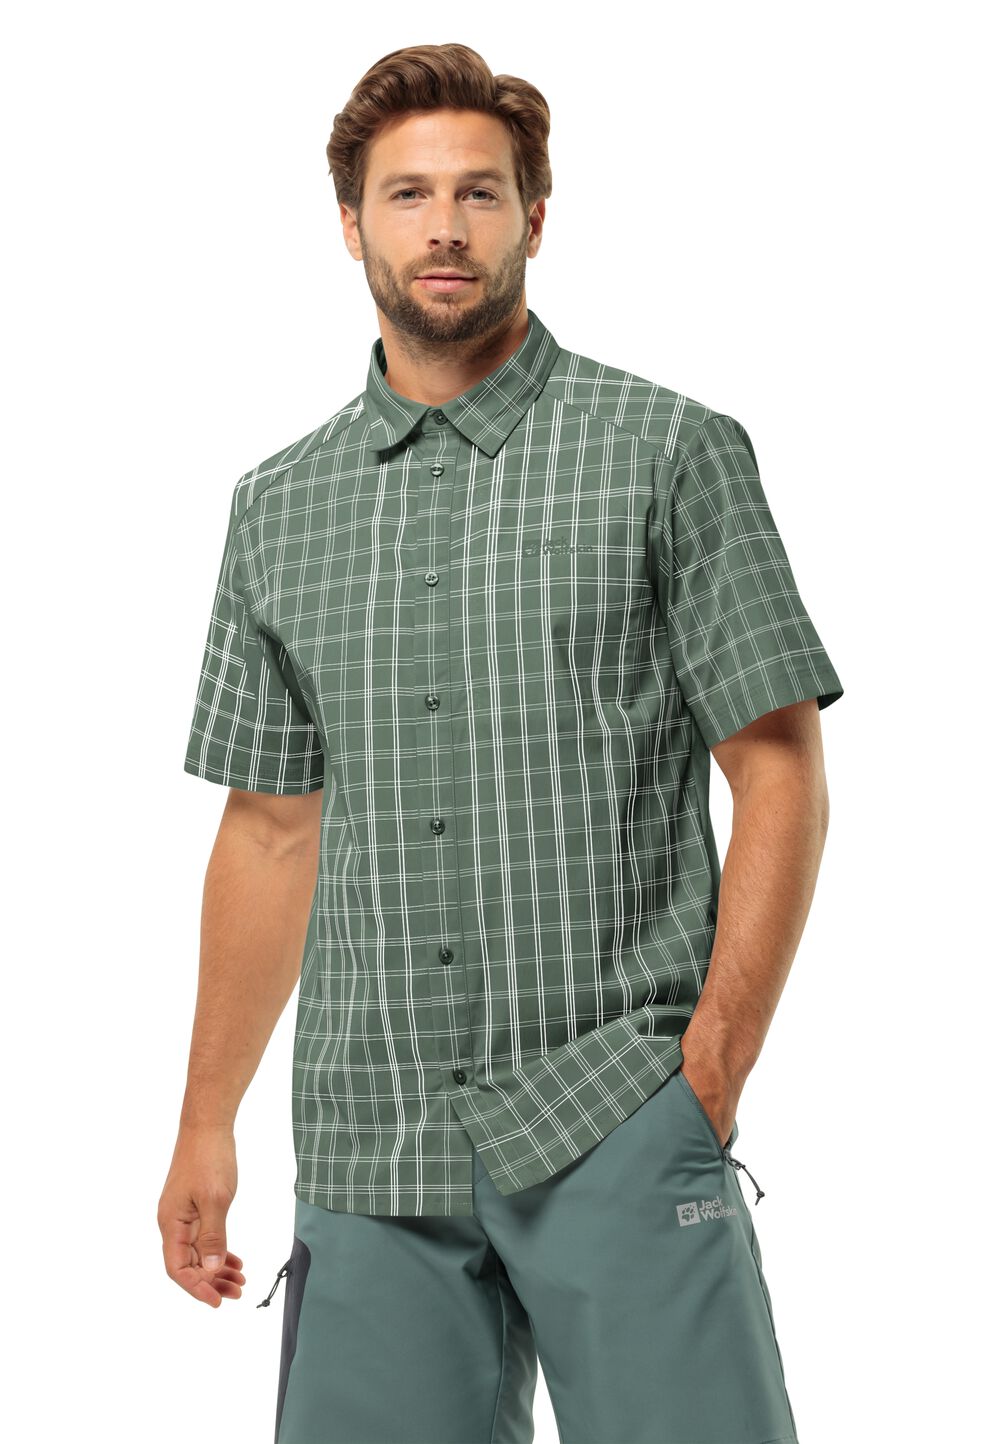 Jack Wolfskin Norbo S S Shirt Men Overhemd met korte mouwen Heren L hedge green checks hedge green checks